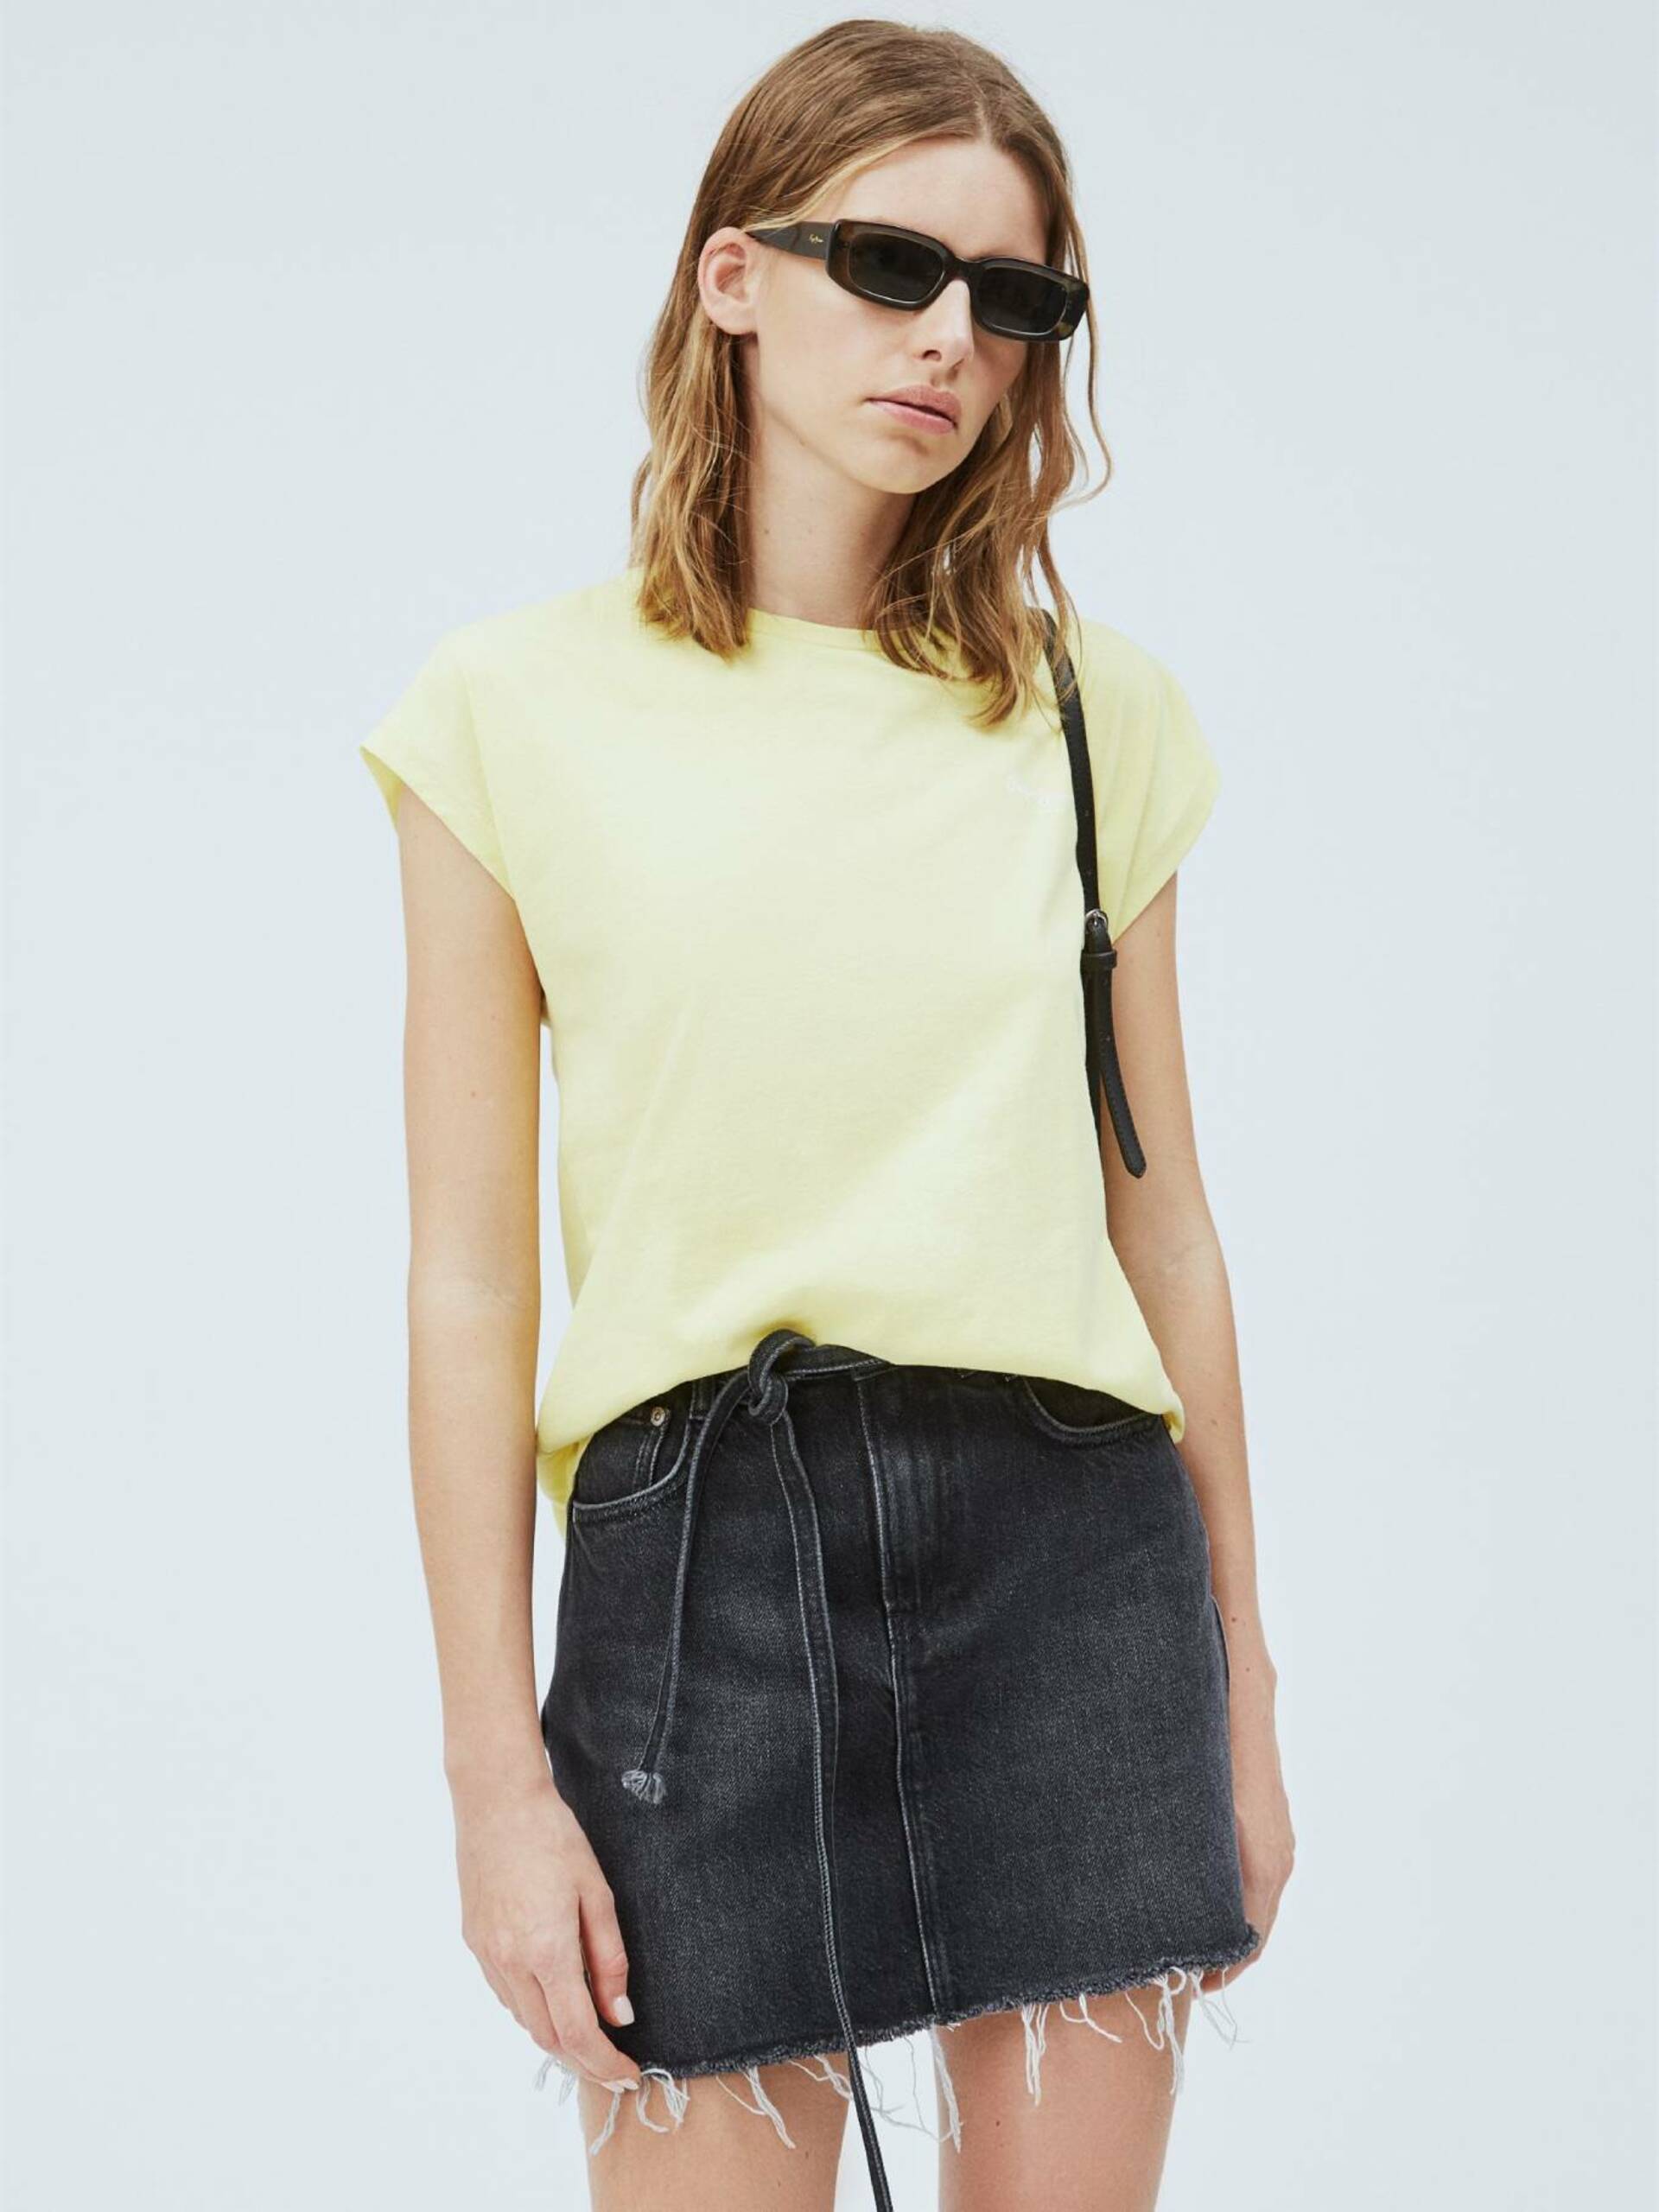 Pepe Jeans dámské žluté tričko - L (014)